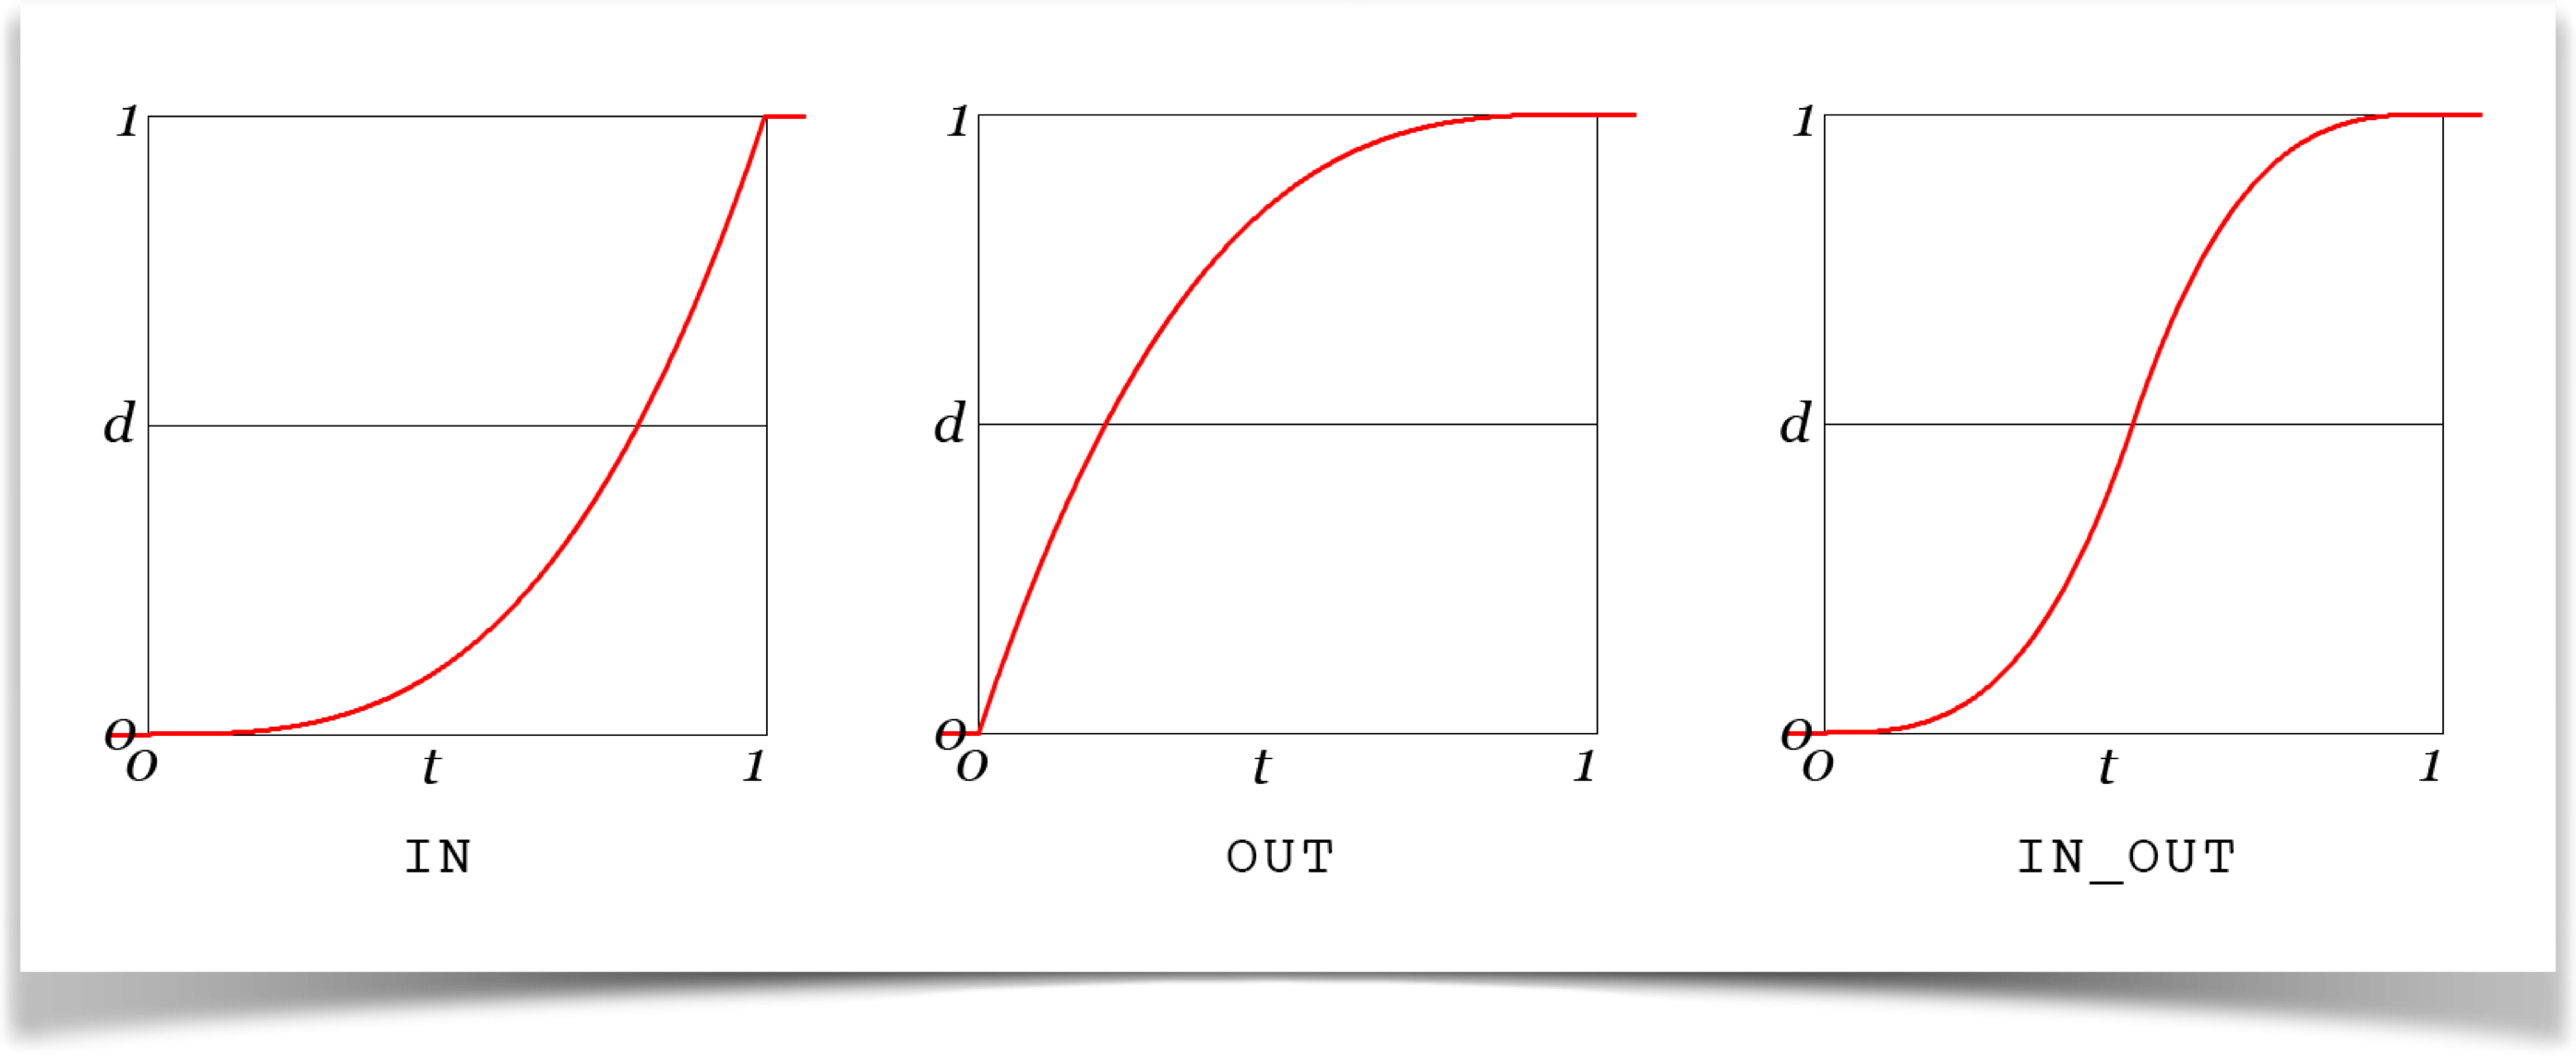 The Cubic curve